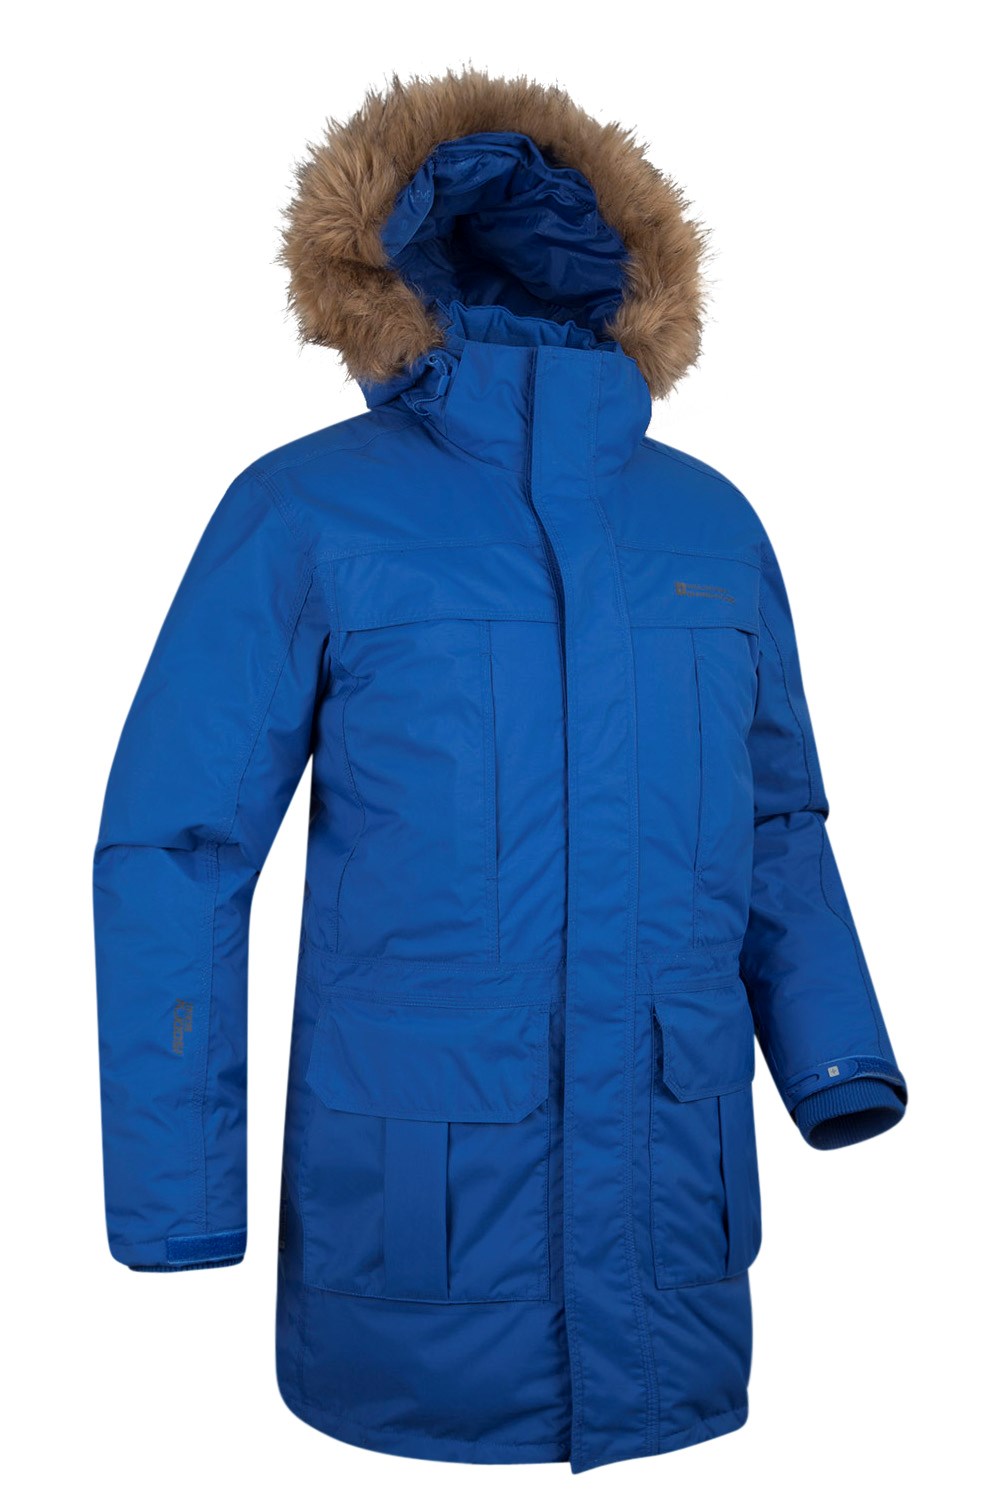 Mountain Warehouse Antarctic Mens Waterproof Puffer Rain Jacket 